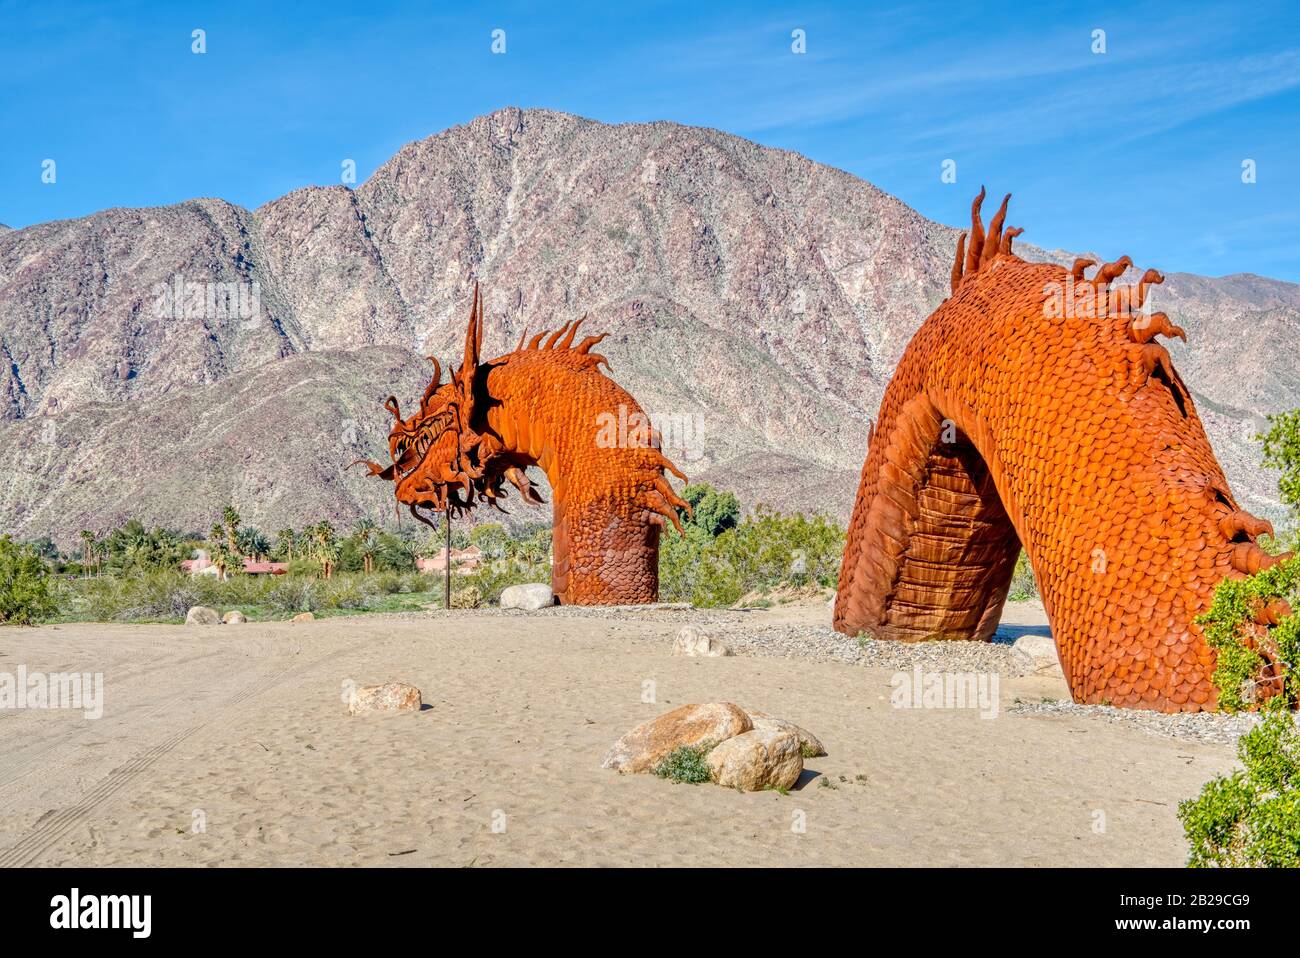 Galleta Meadows In Borrego Springs, Kalifornien, Zeigt Über 130 Große Skulpturen aus Metall mit Verschiedenen Themen WIE Desert Animals und Prehistor Stockfoto